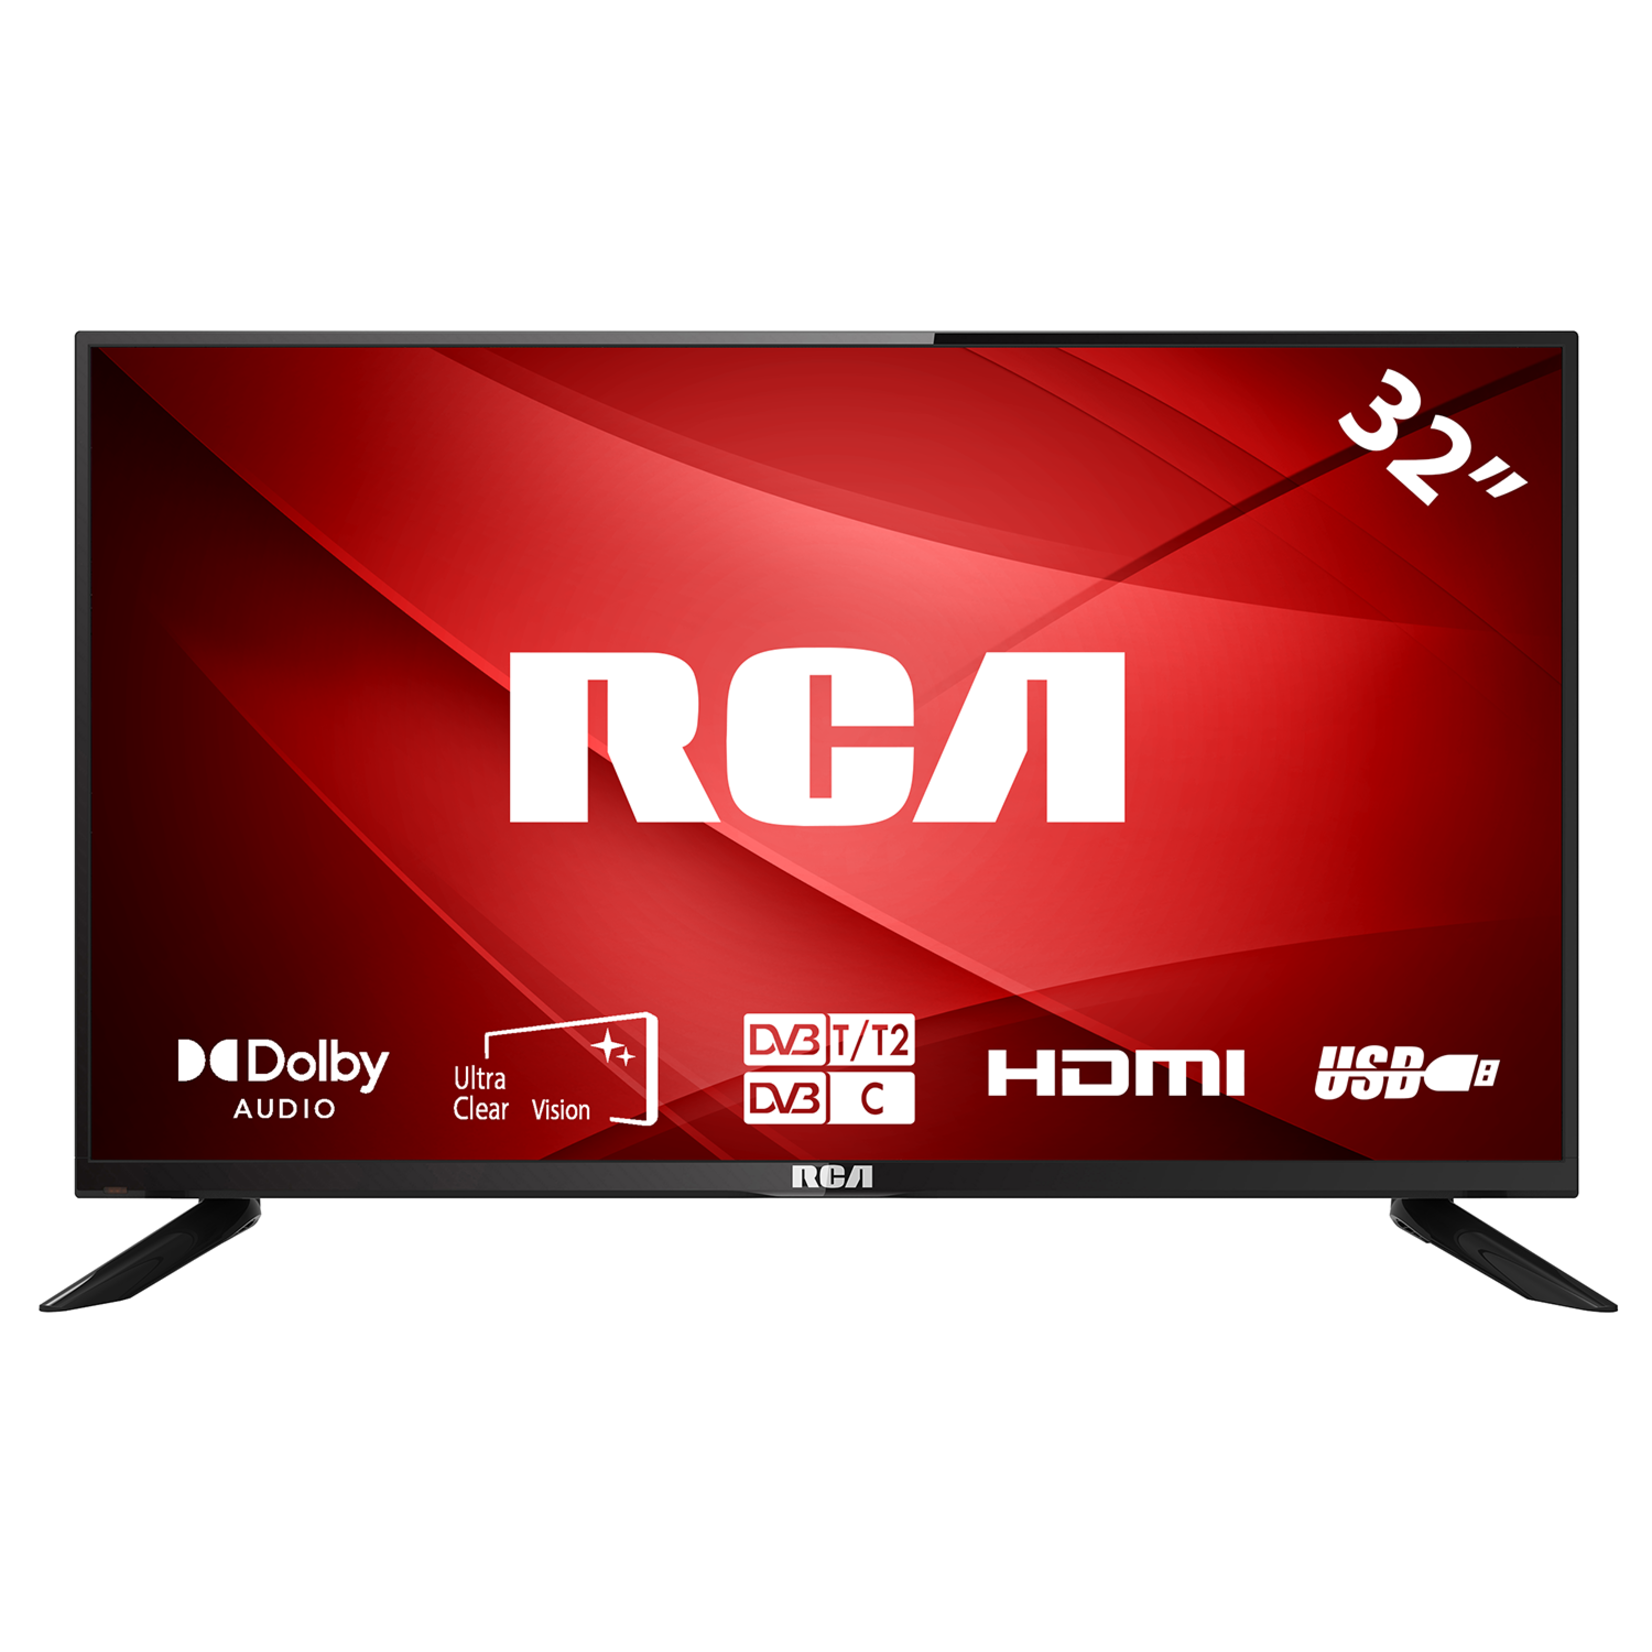 RCA RCA RB32H1-EU LED TV (32 inch HD TV)